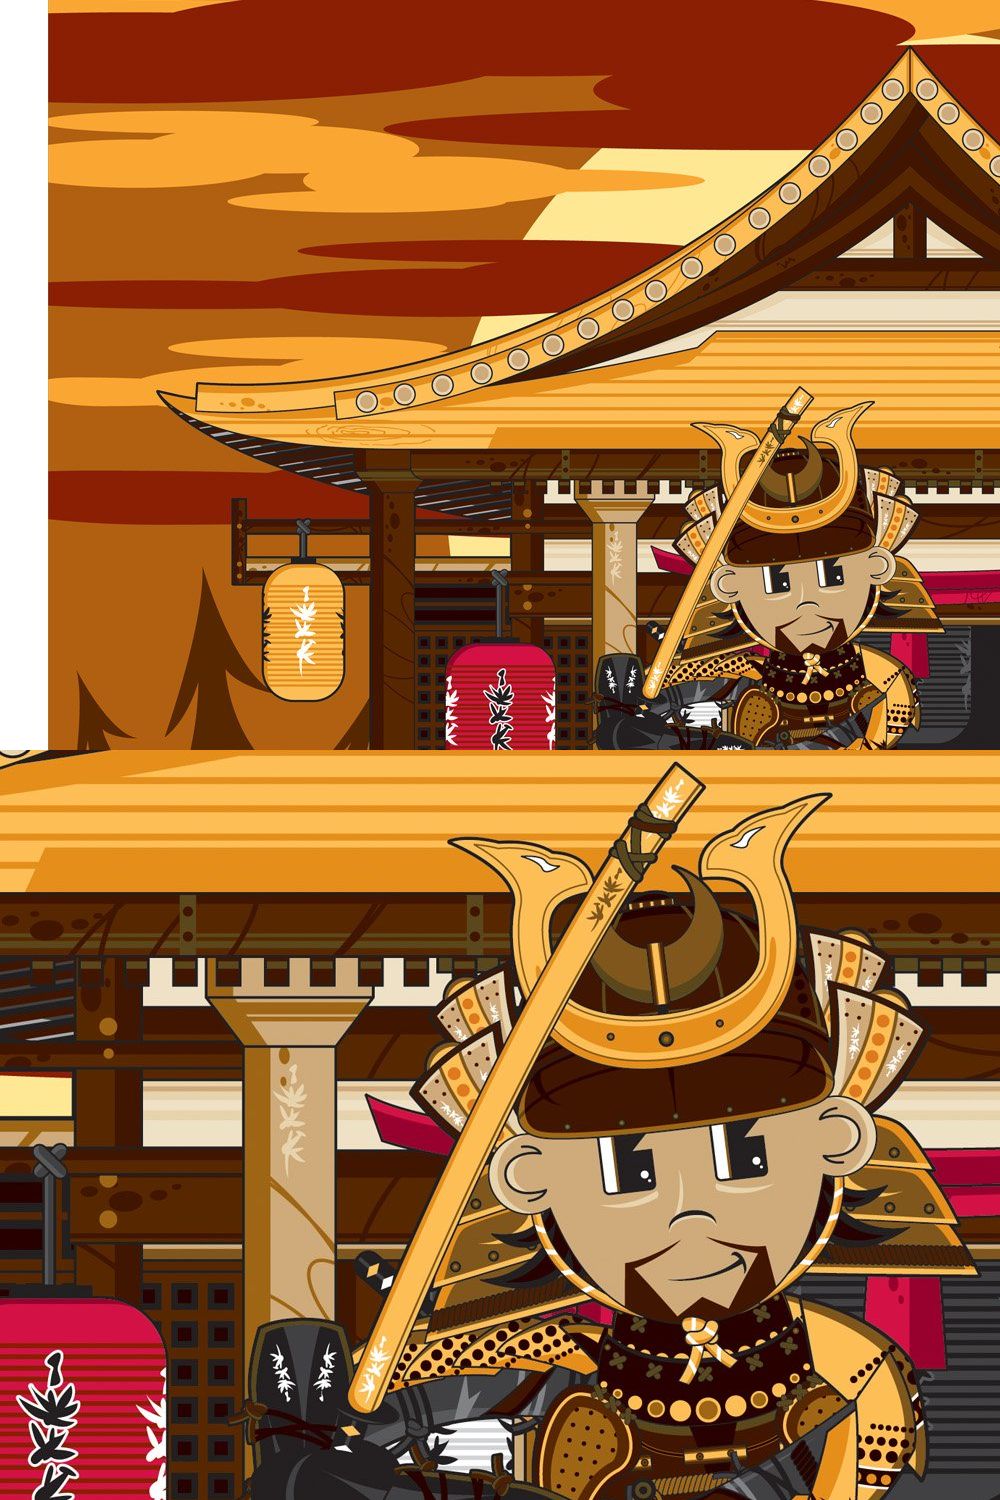 Fierce Samurai Warrior at Temple pinterest preview image.